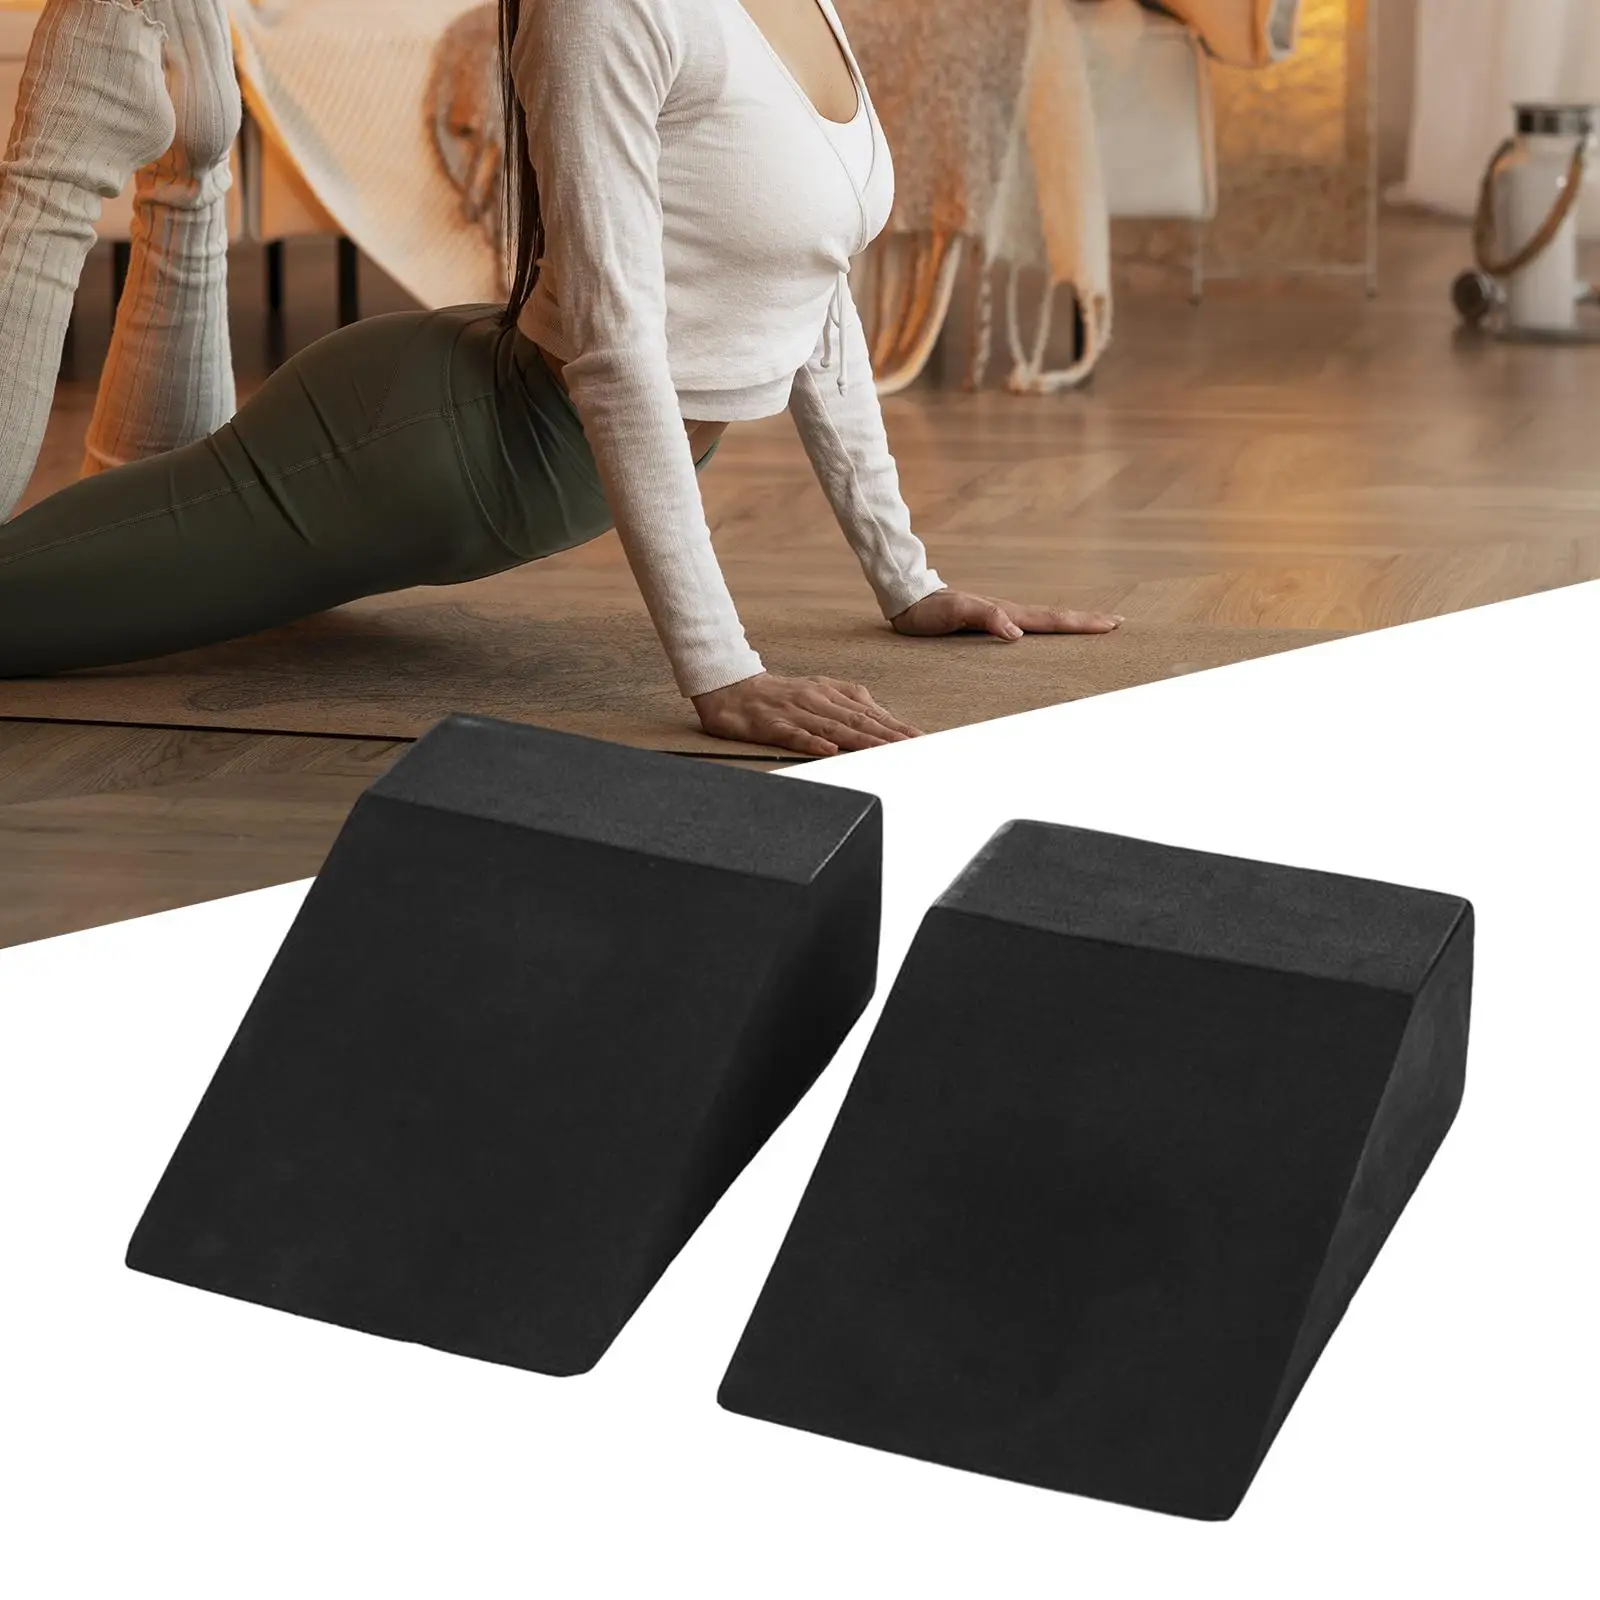 2x Squat Wedge Leg Stretch Training Equipment Yoga Foam Wedge for Sports Tight Calves Ankle Foot Calf Stretching Women Men